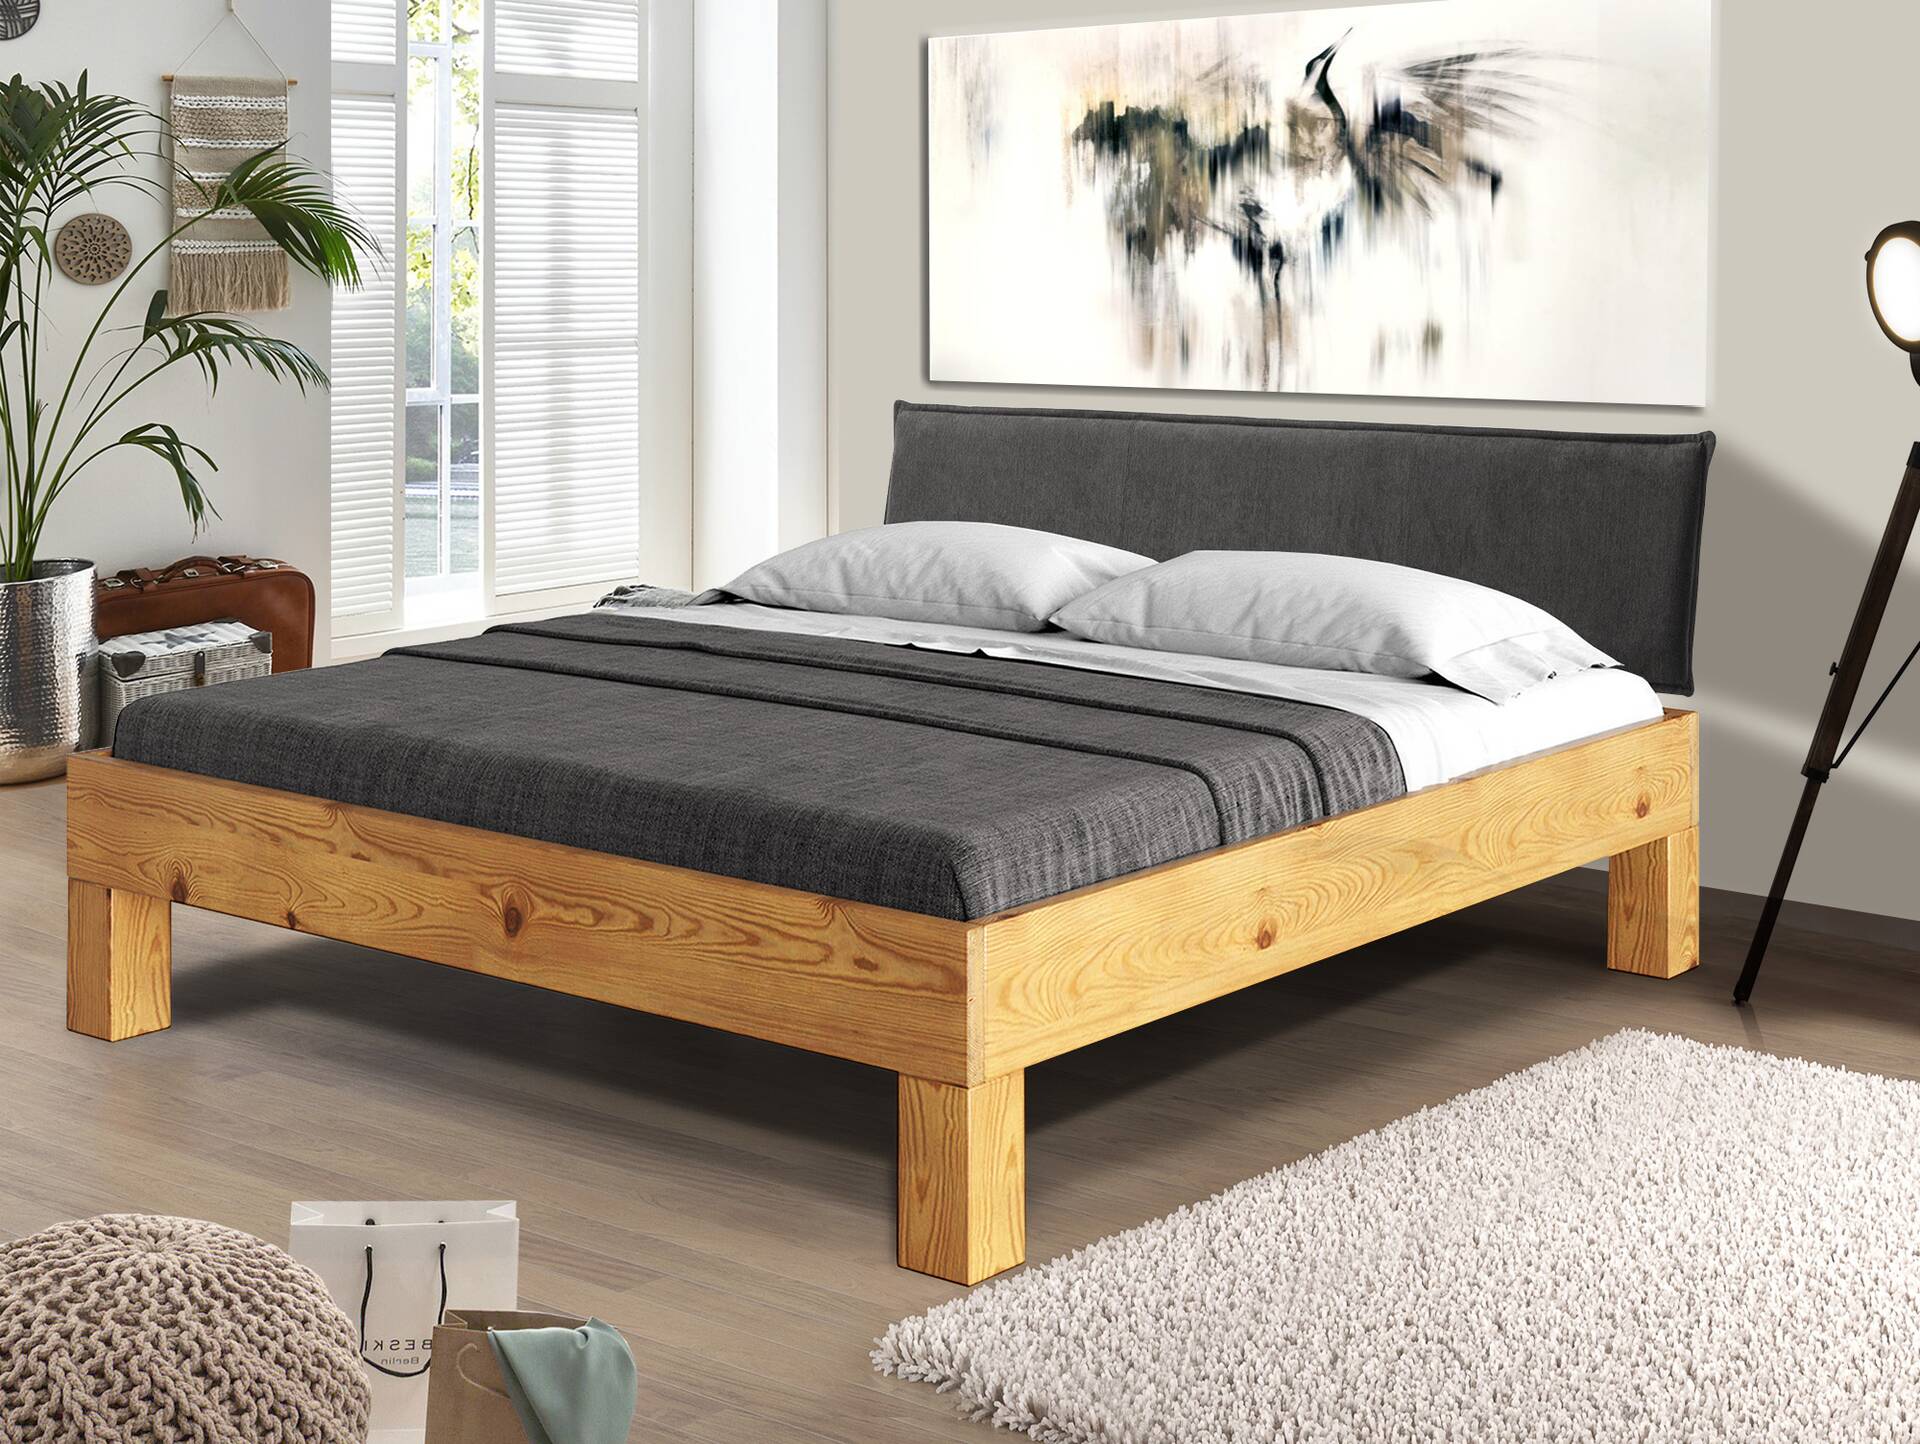 CURBY 4-Fuß-Bett mit Polster-Kopfteil, Material Massivholz, rustikale Altholzoptik, Fichte 90 x 200 cm | natur | Stoff Anthrazit ohne Steppung | Standardhöhe